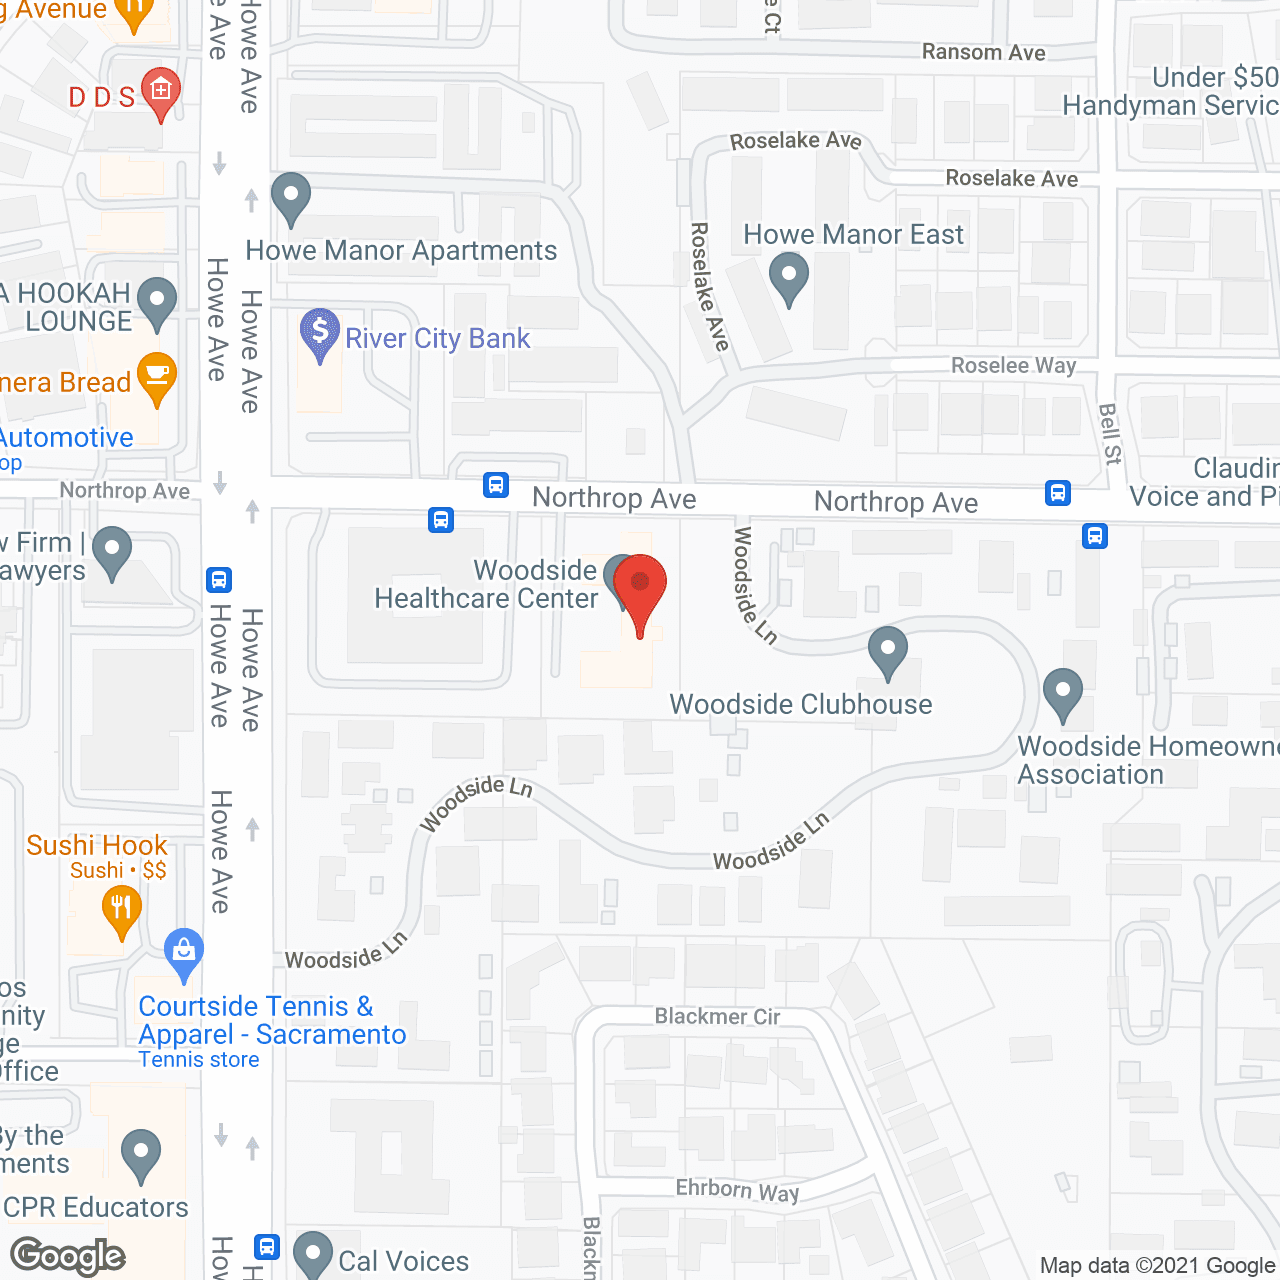 Woodside Healthcare Center in google map